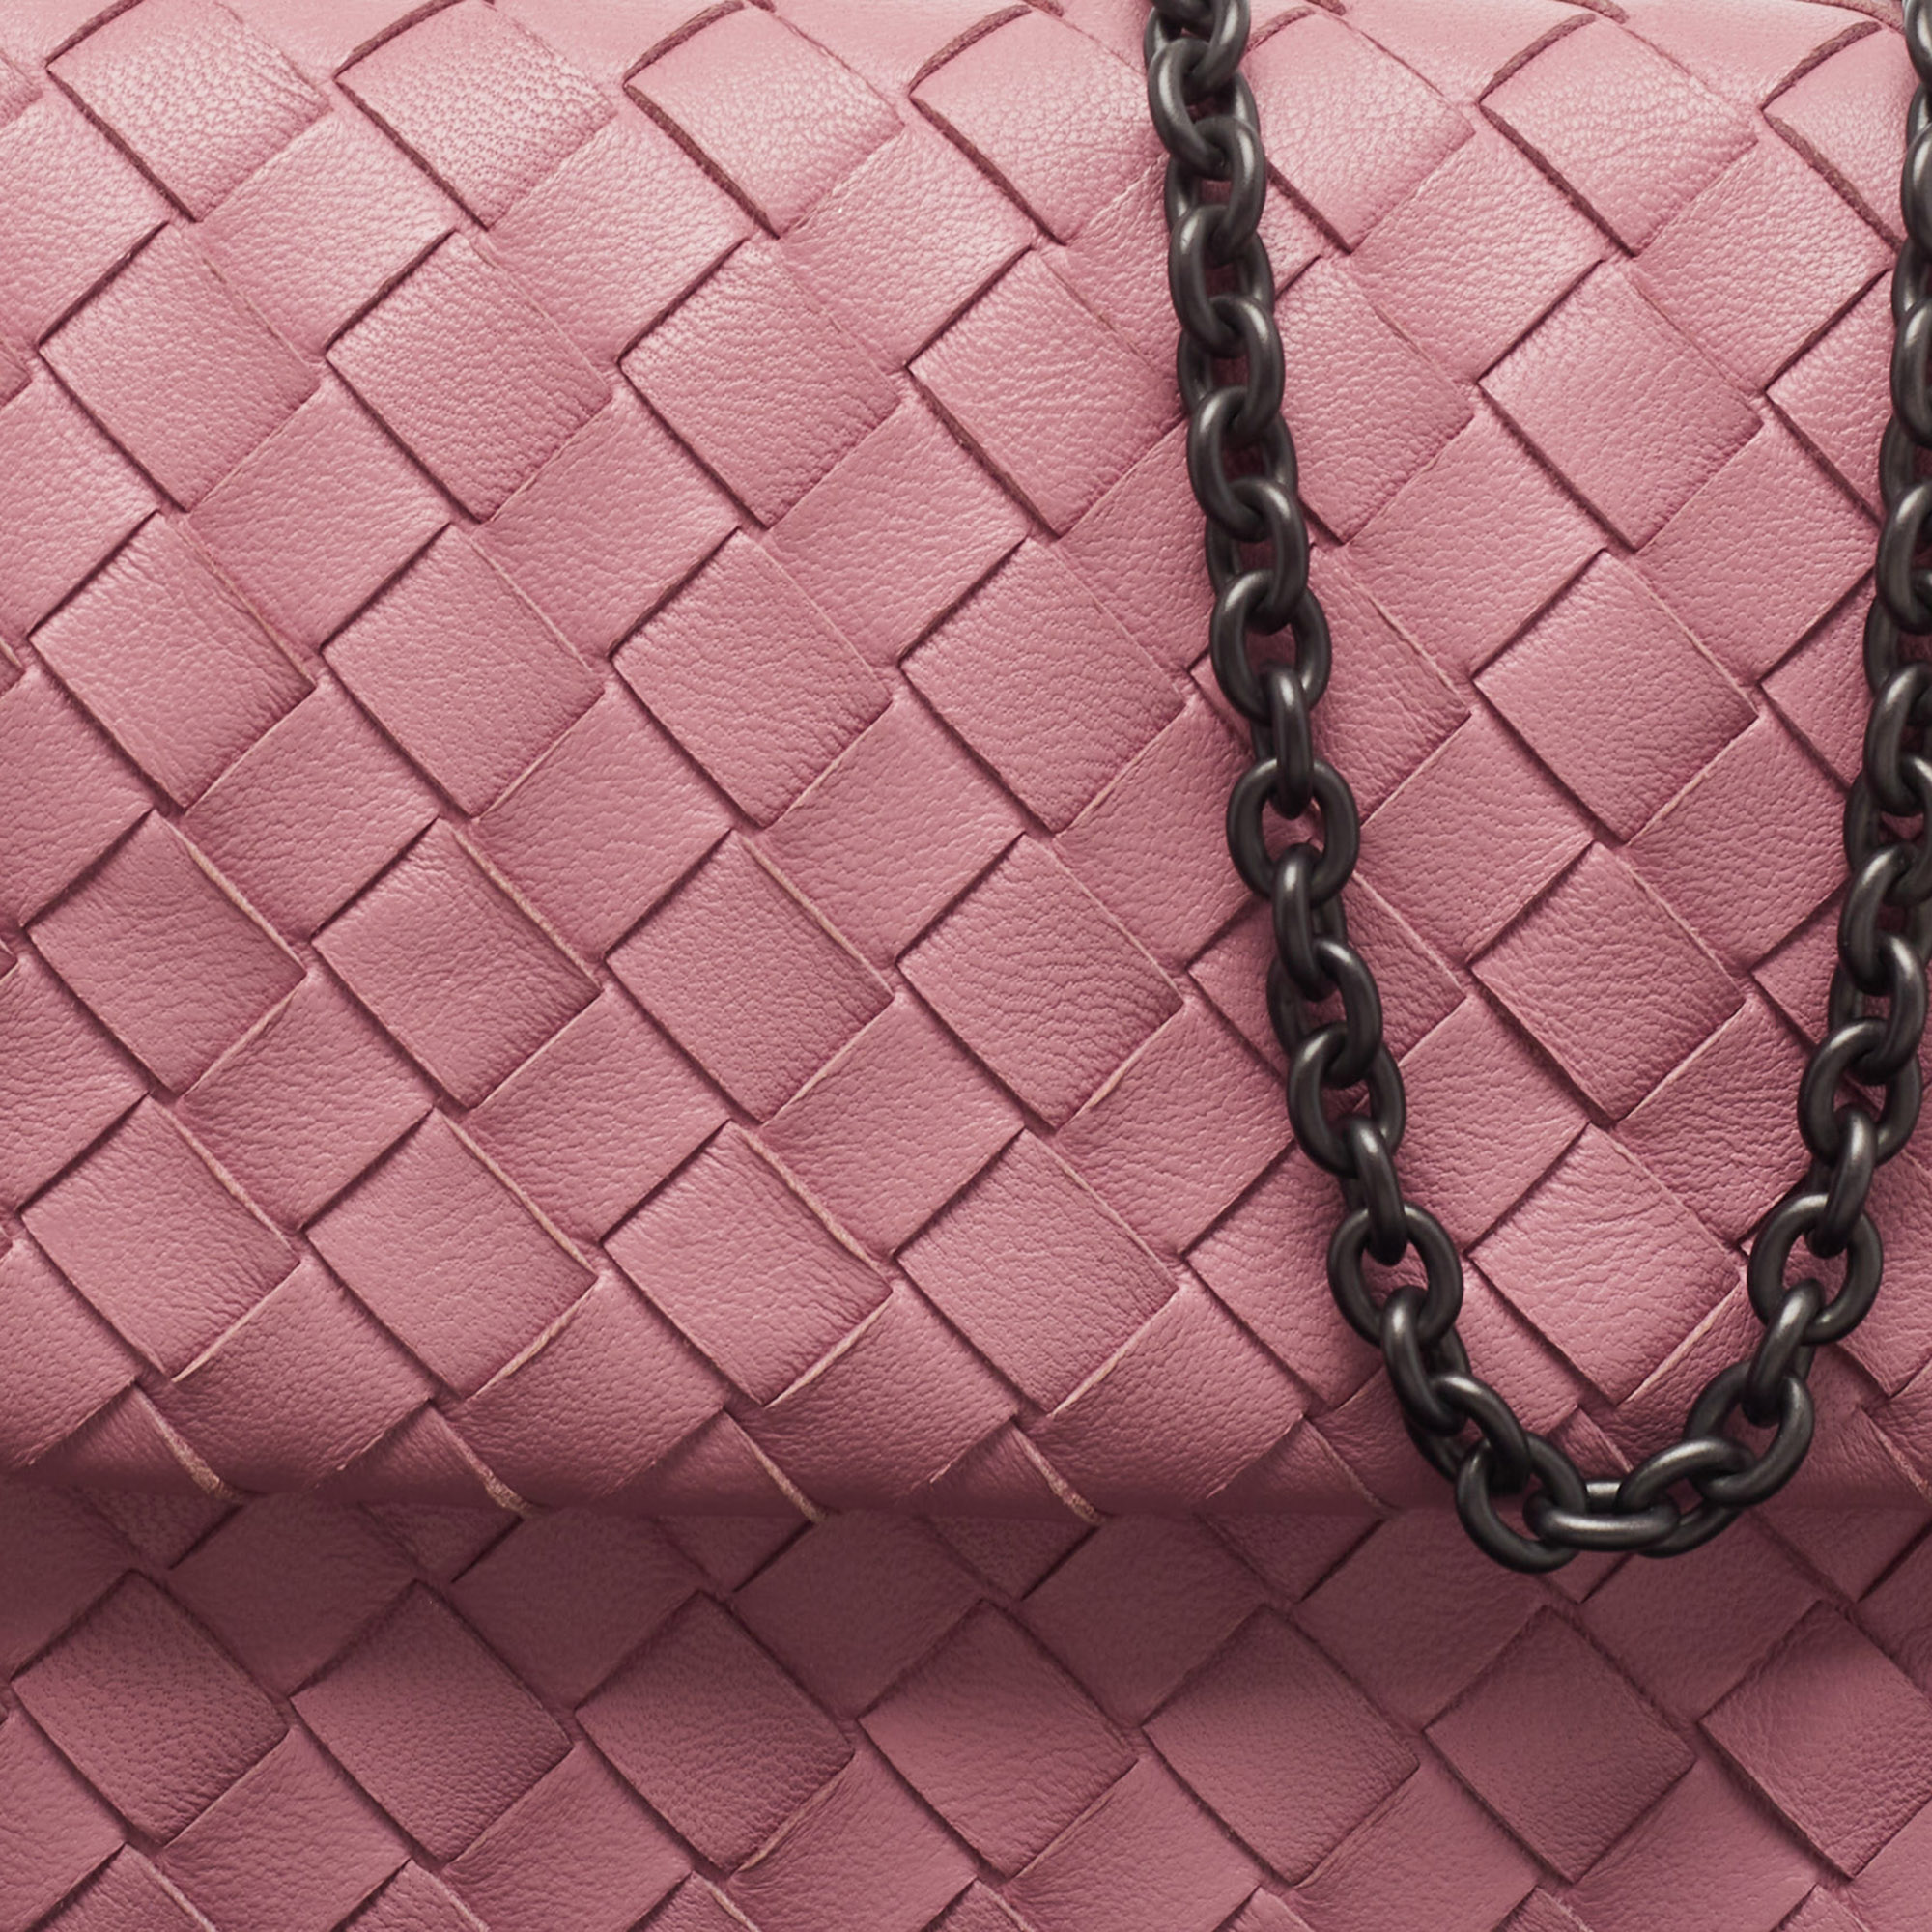 Bottega Veneta Light Pink Intreccaito Leather Olimpia Chain Shoulder Bag